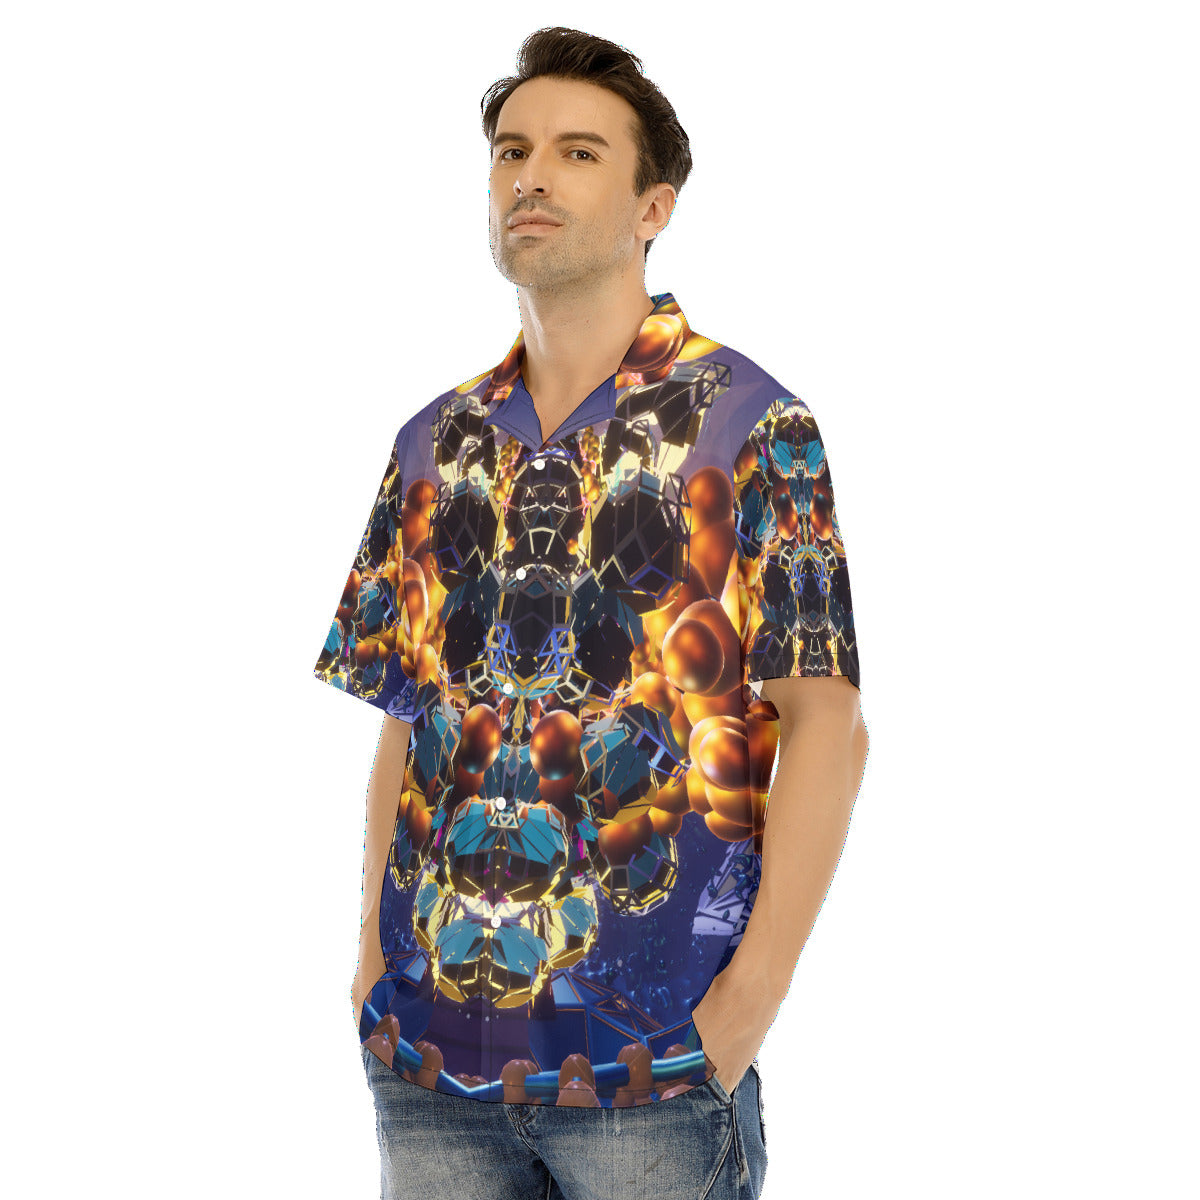 Psychedelic 3D Digital Art Print Men's Hawaiian Shirt With Button Closure